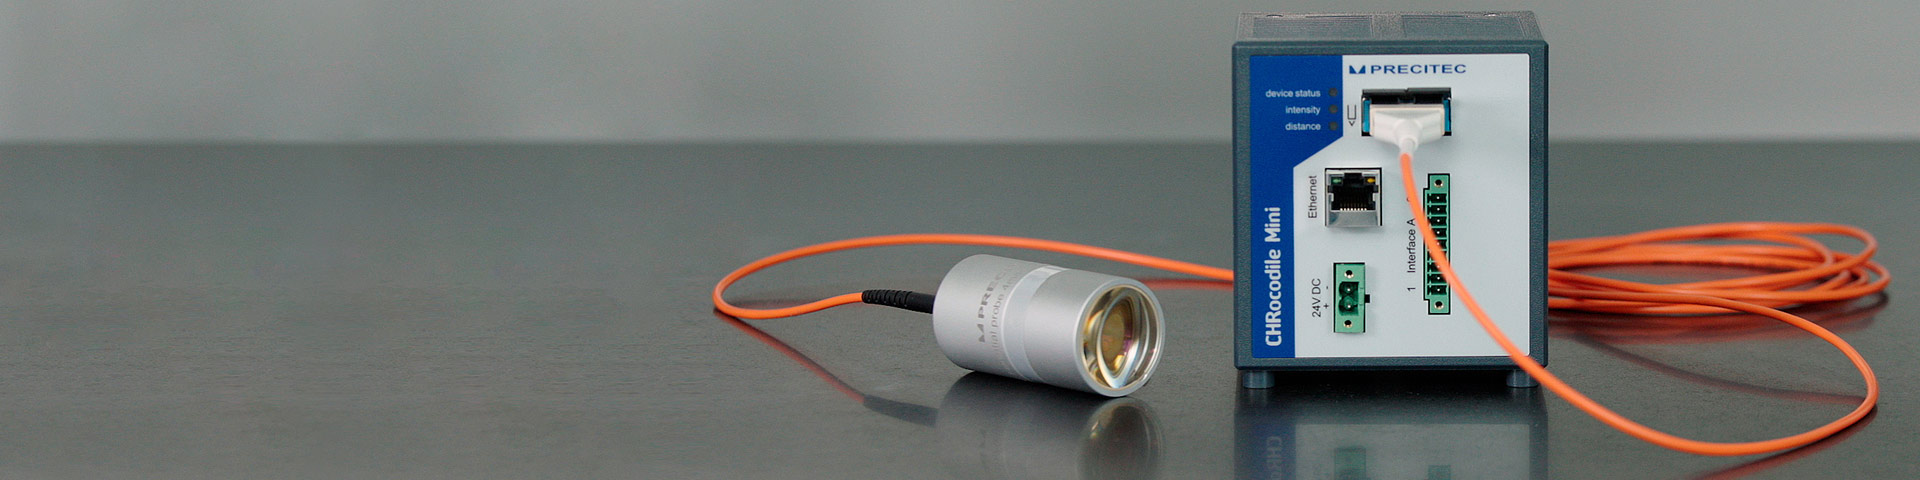 CHRocodile Mini 光谱共焦传感器